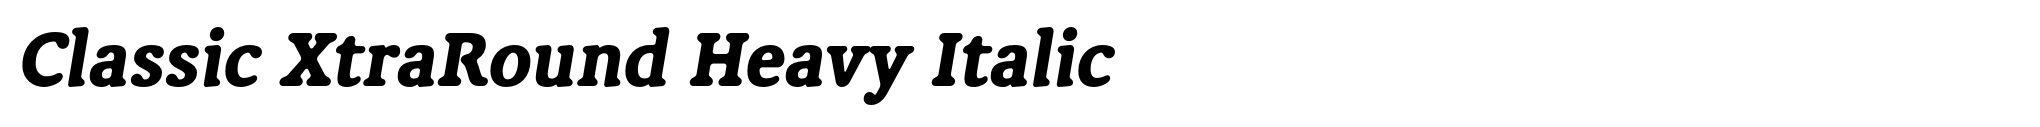 Classic XtraRound Heavy Italic image